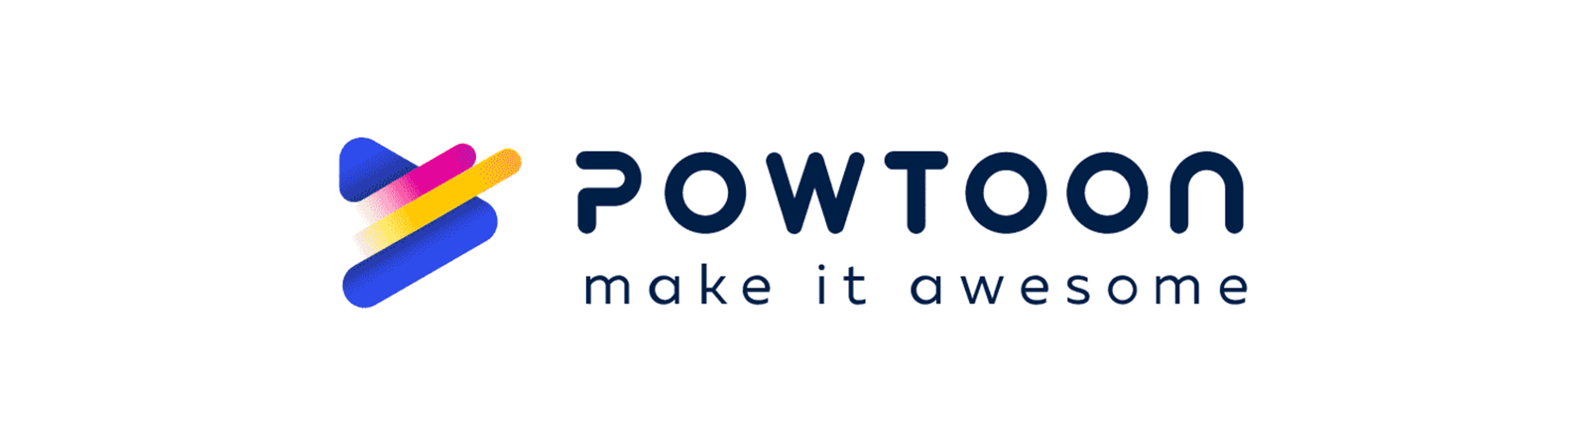 Logo for Powtoon